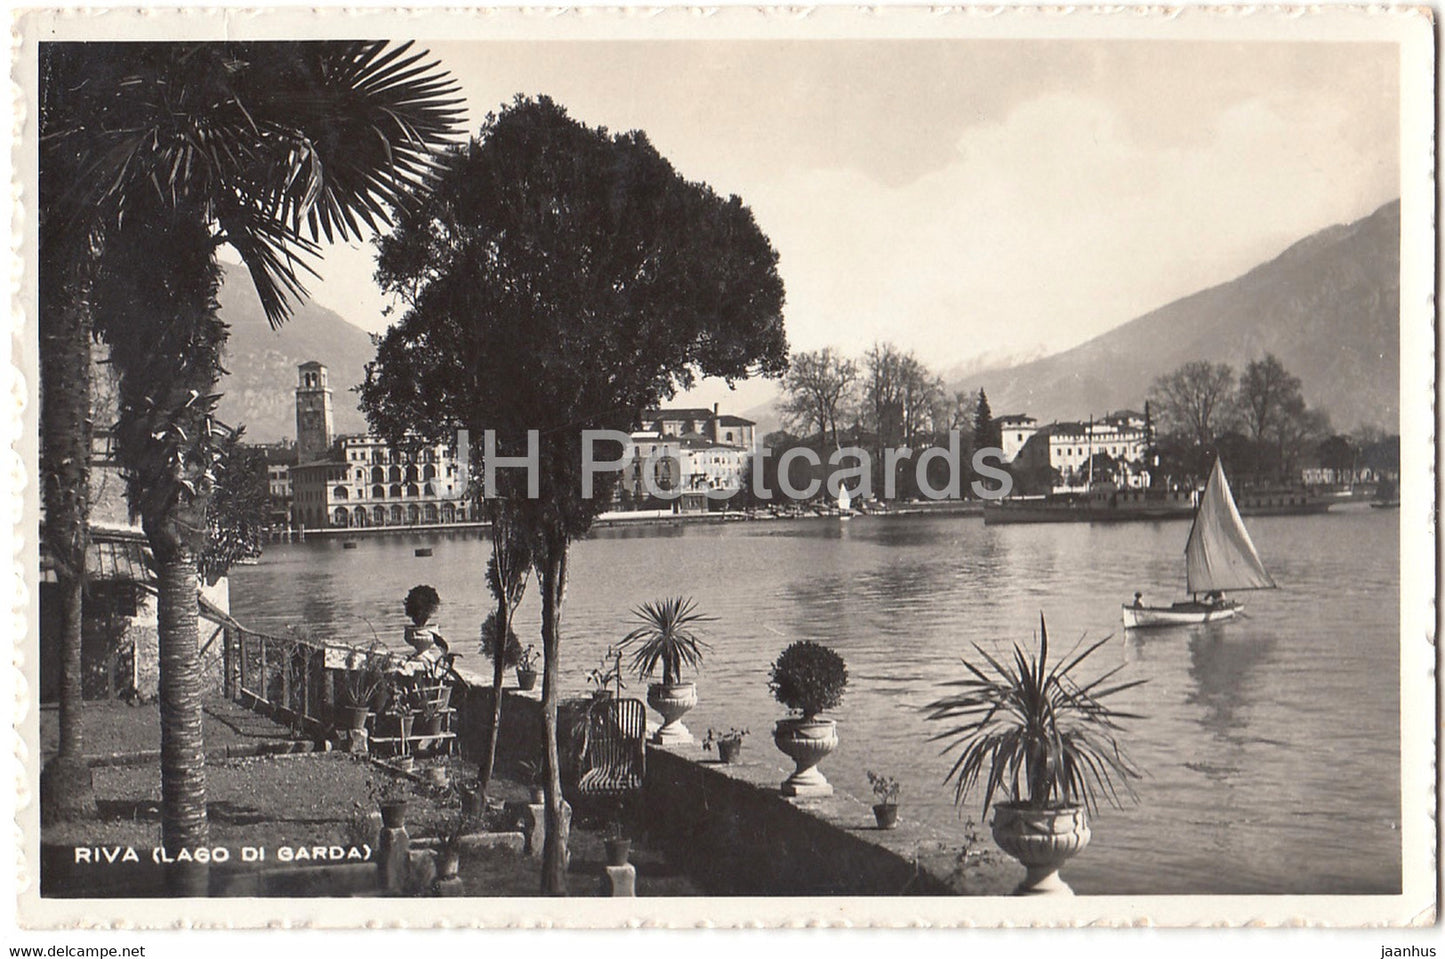 Riva - Lago di Garda - old postcard - 1925 - Italy - used - JH Postcards